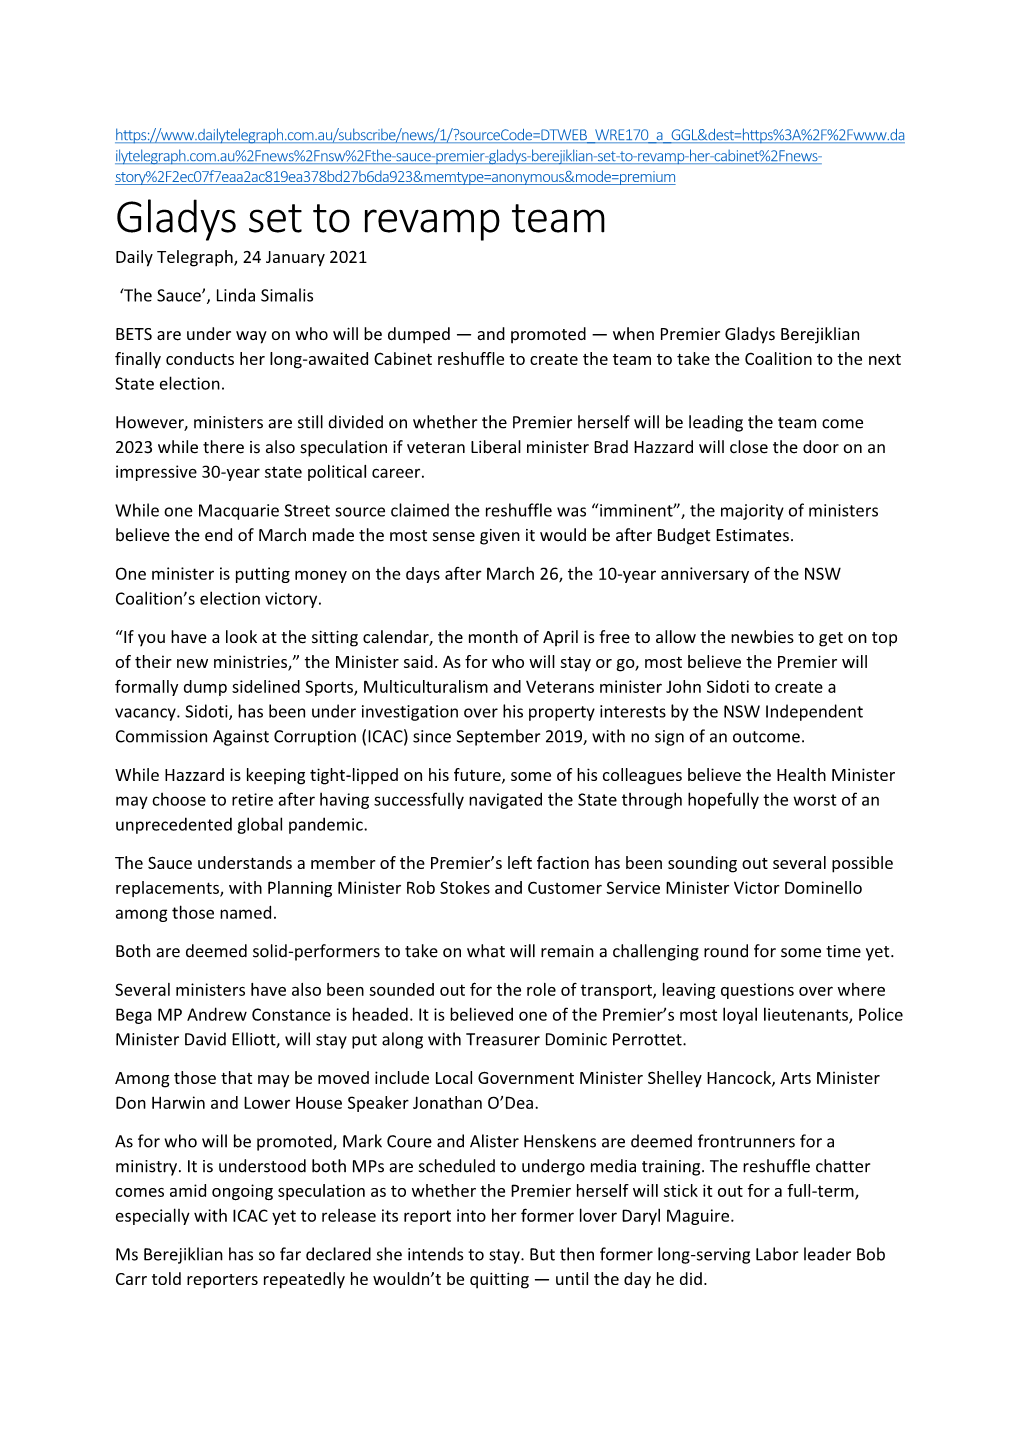 Gladys Set to Revamp Team Daily Telegraph, 24 January 2021